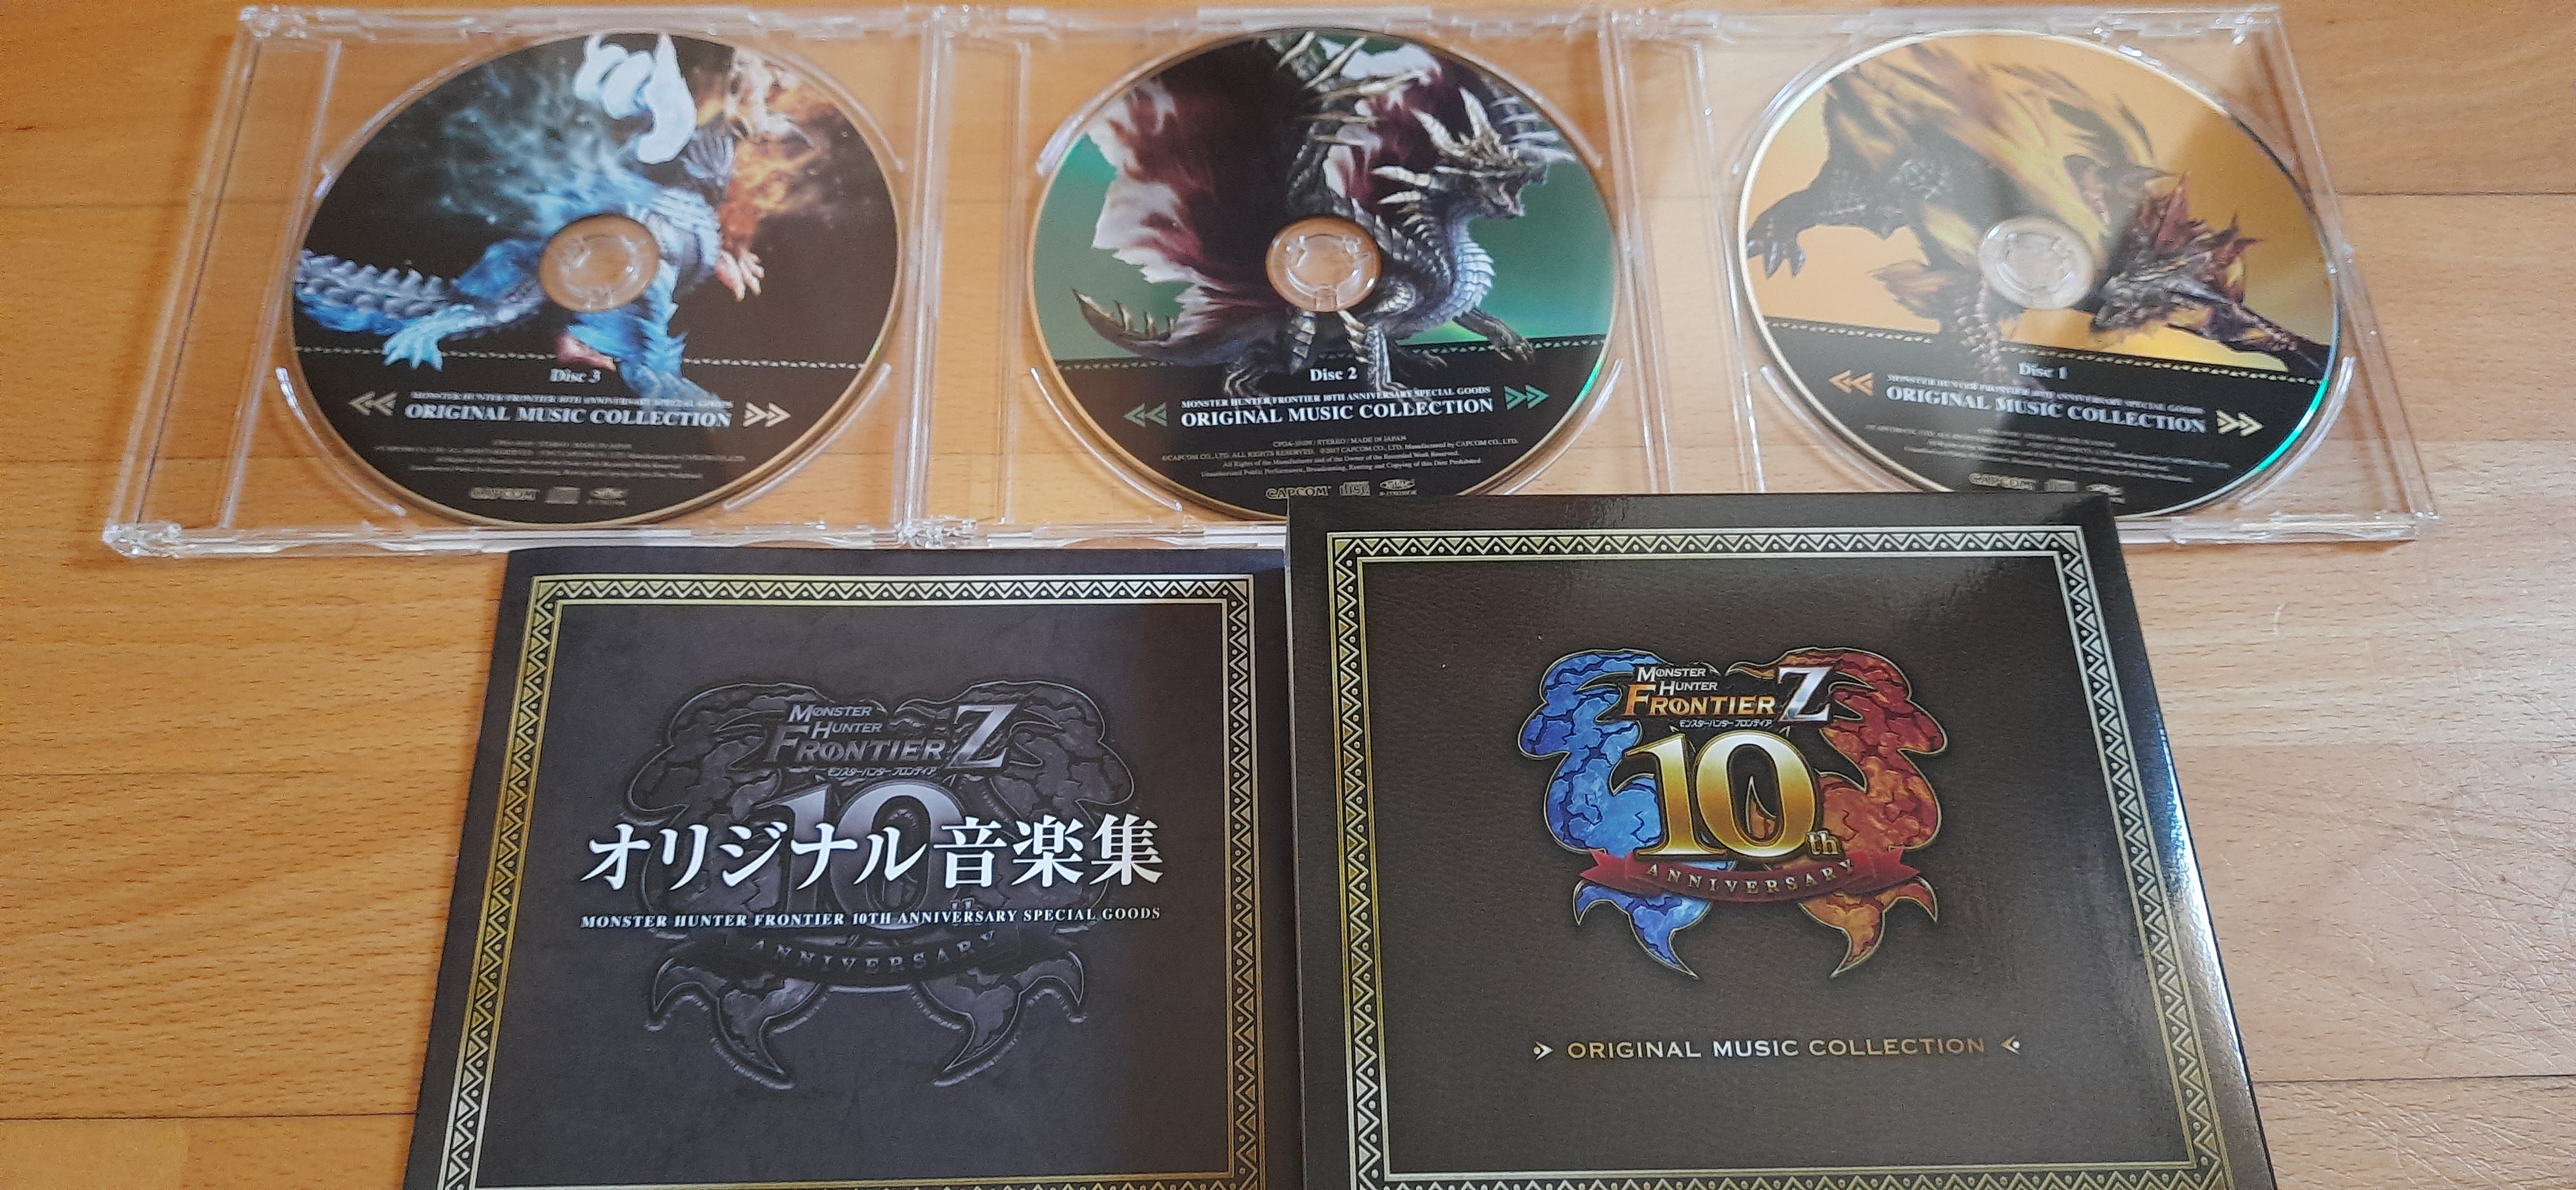 Monster Hunter Frontier Soundtrack CDs